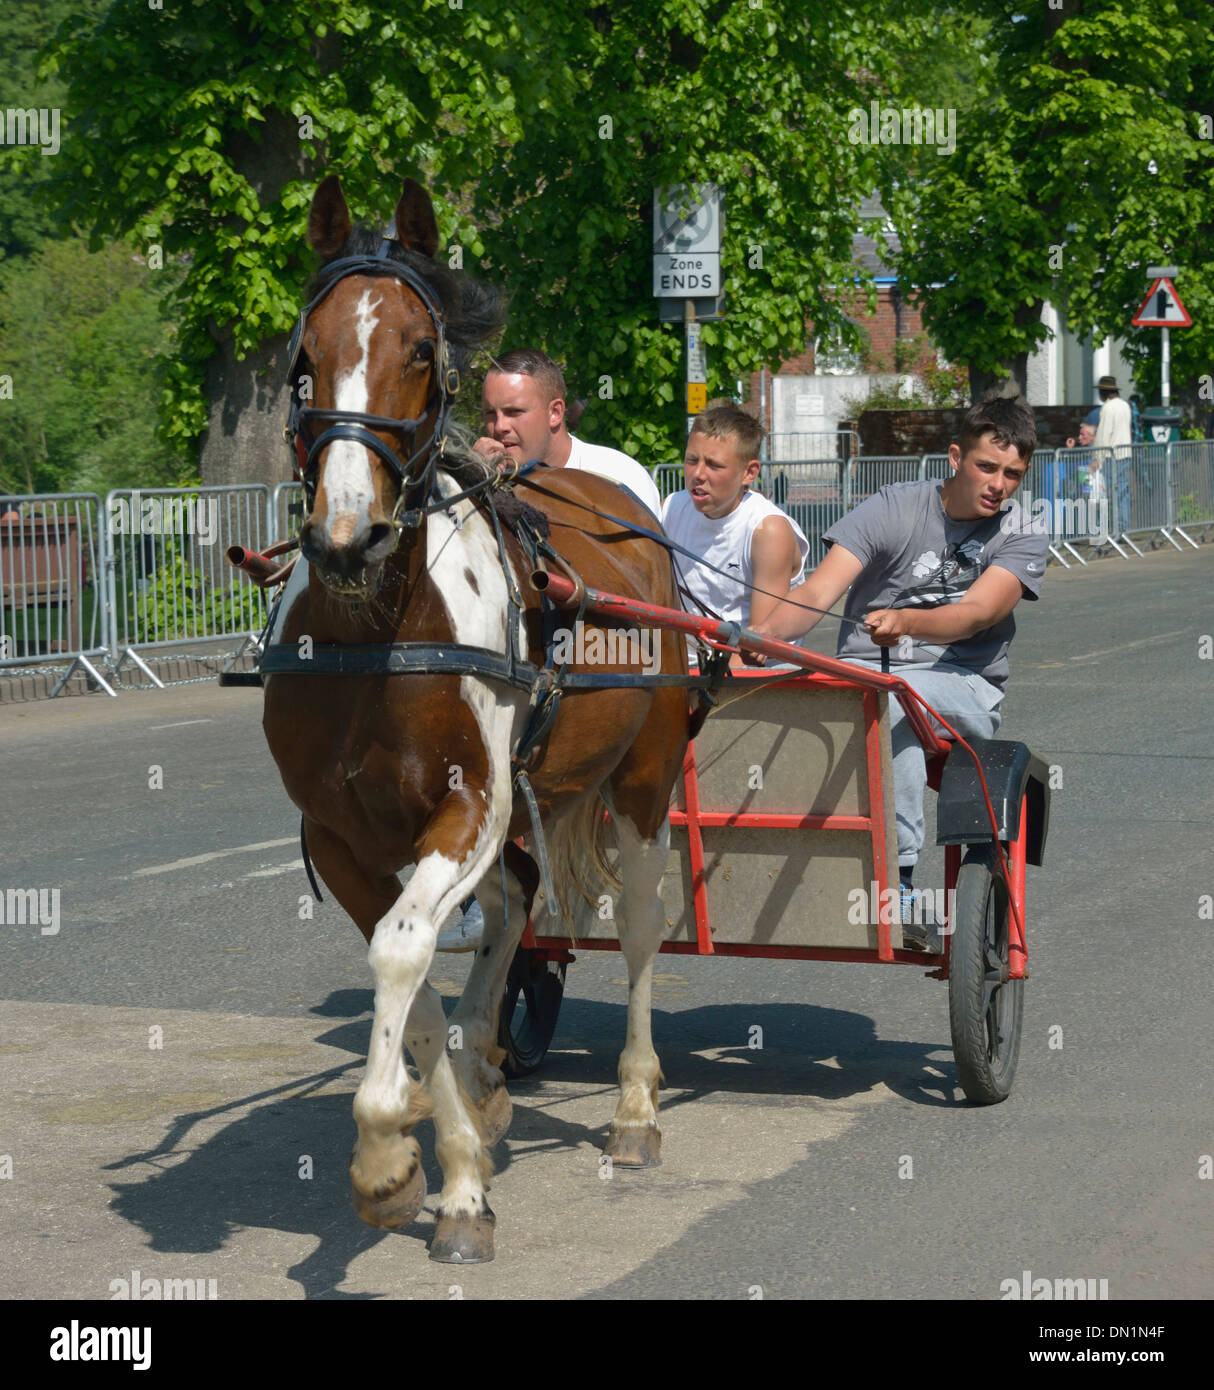 Gypsy travellers. Appleby Horse Fair, June 2013. Appleby-in-Westmorland, Cumbria, England, United Kingdom, Europe. Stock Photo